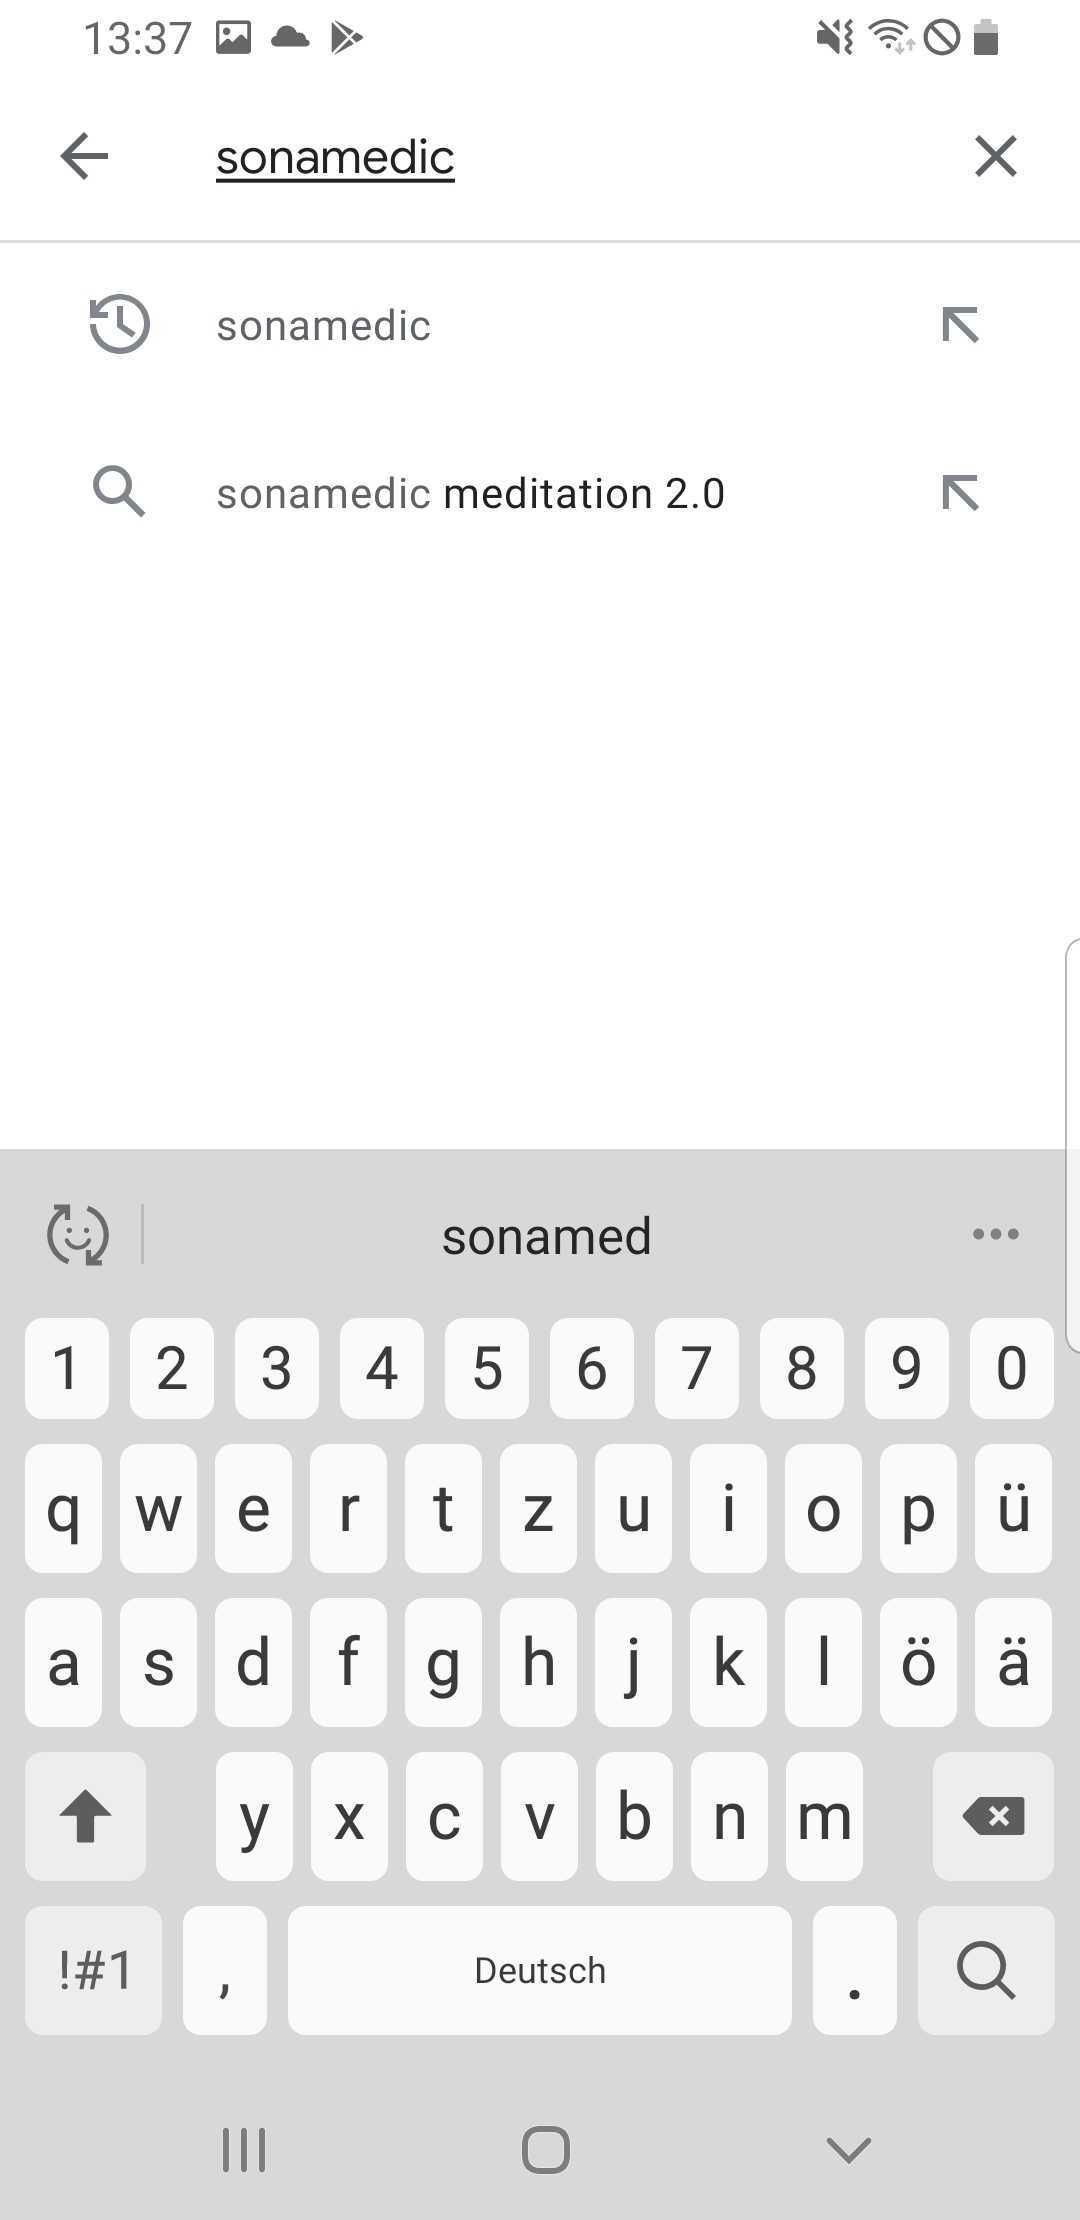 Search sonamedic in Google Play